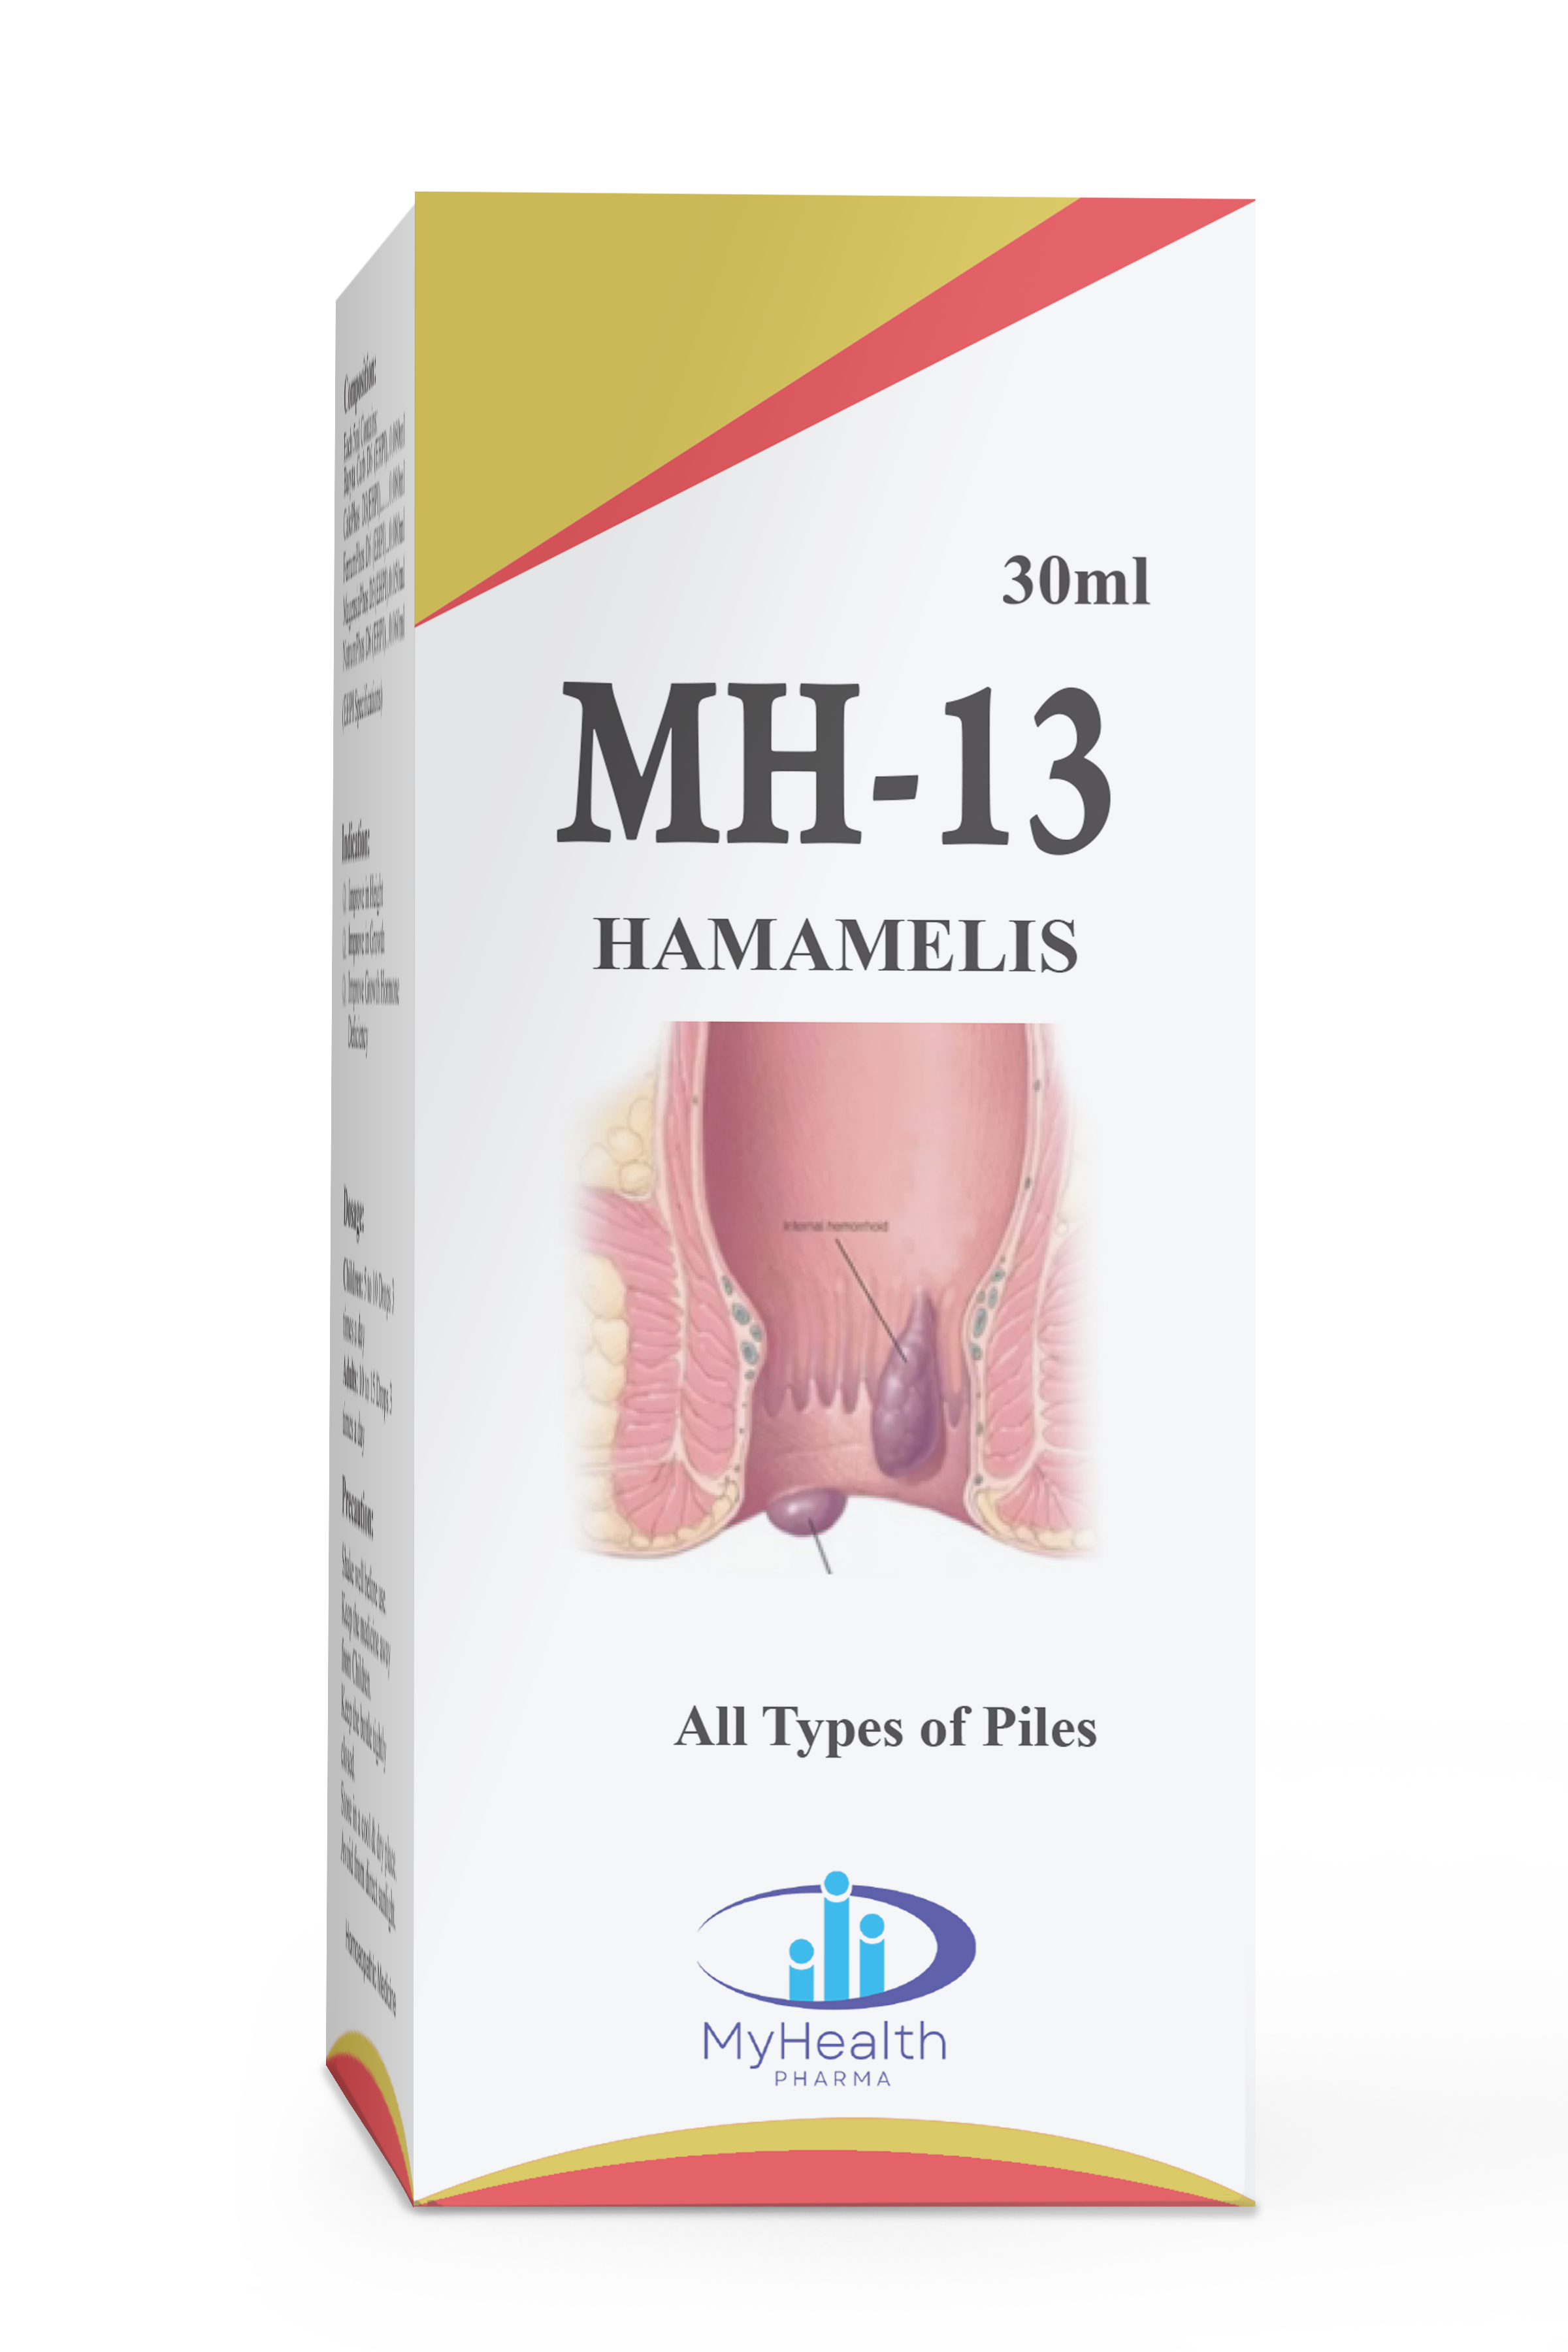 MH-13 HAMAMELIS